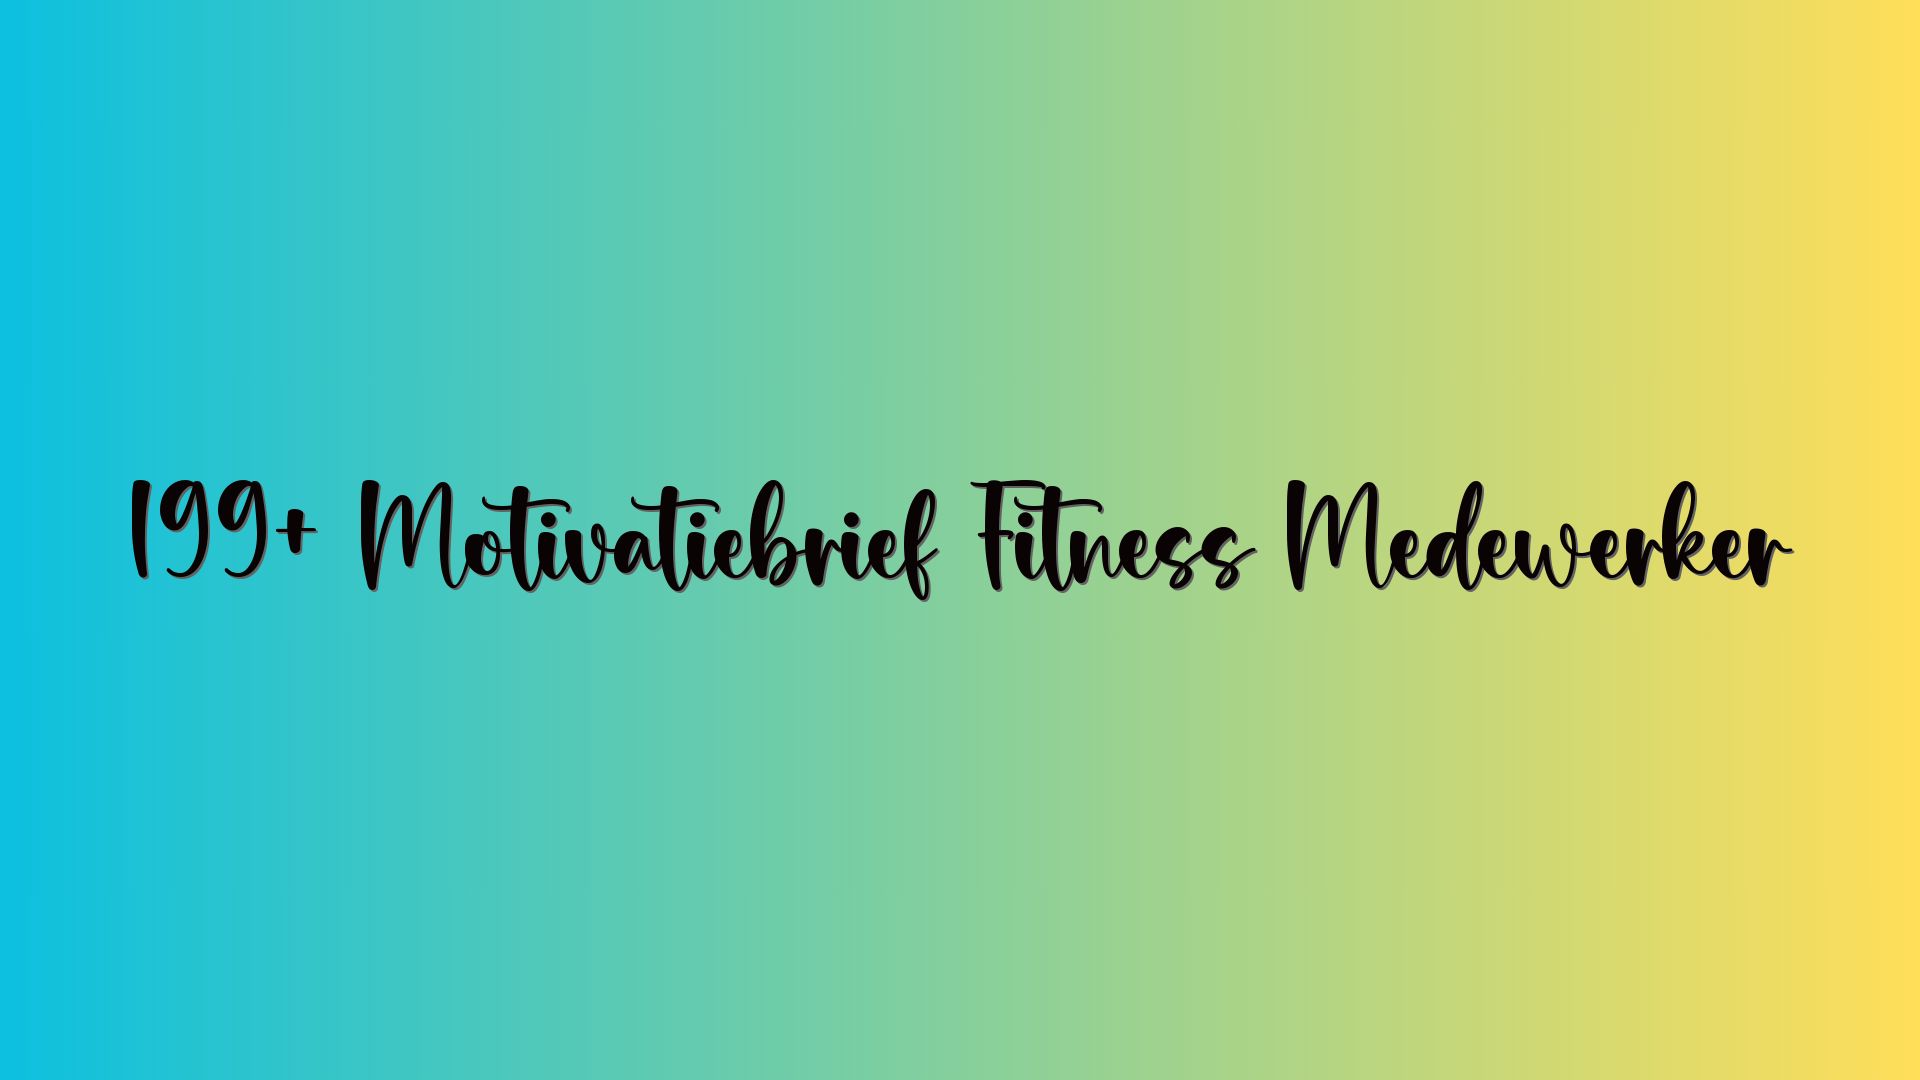 199+ Motivatiebrief Fitness Medewerker